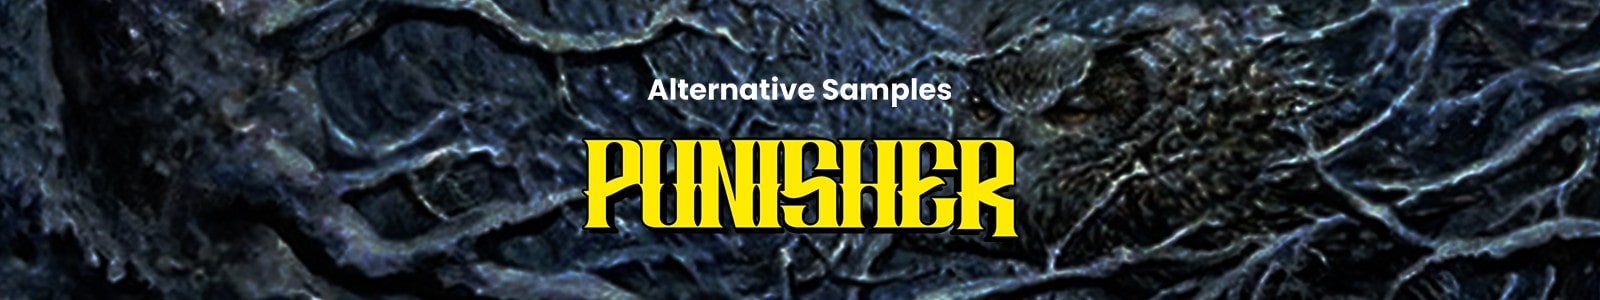 Punisher & Vikings Cinematic Trailer Instruments by Alternative Samples